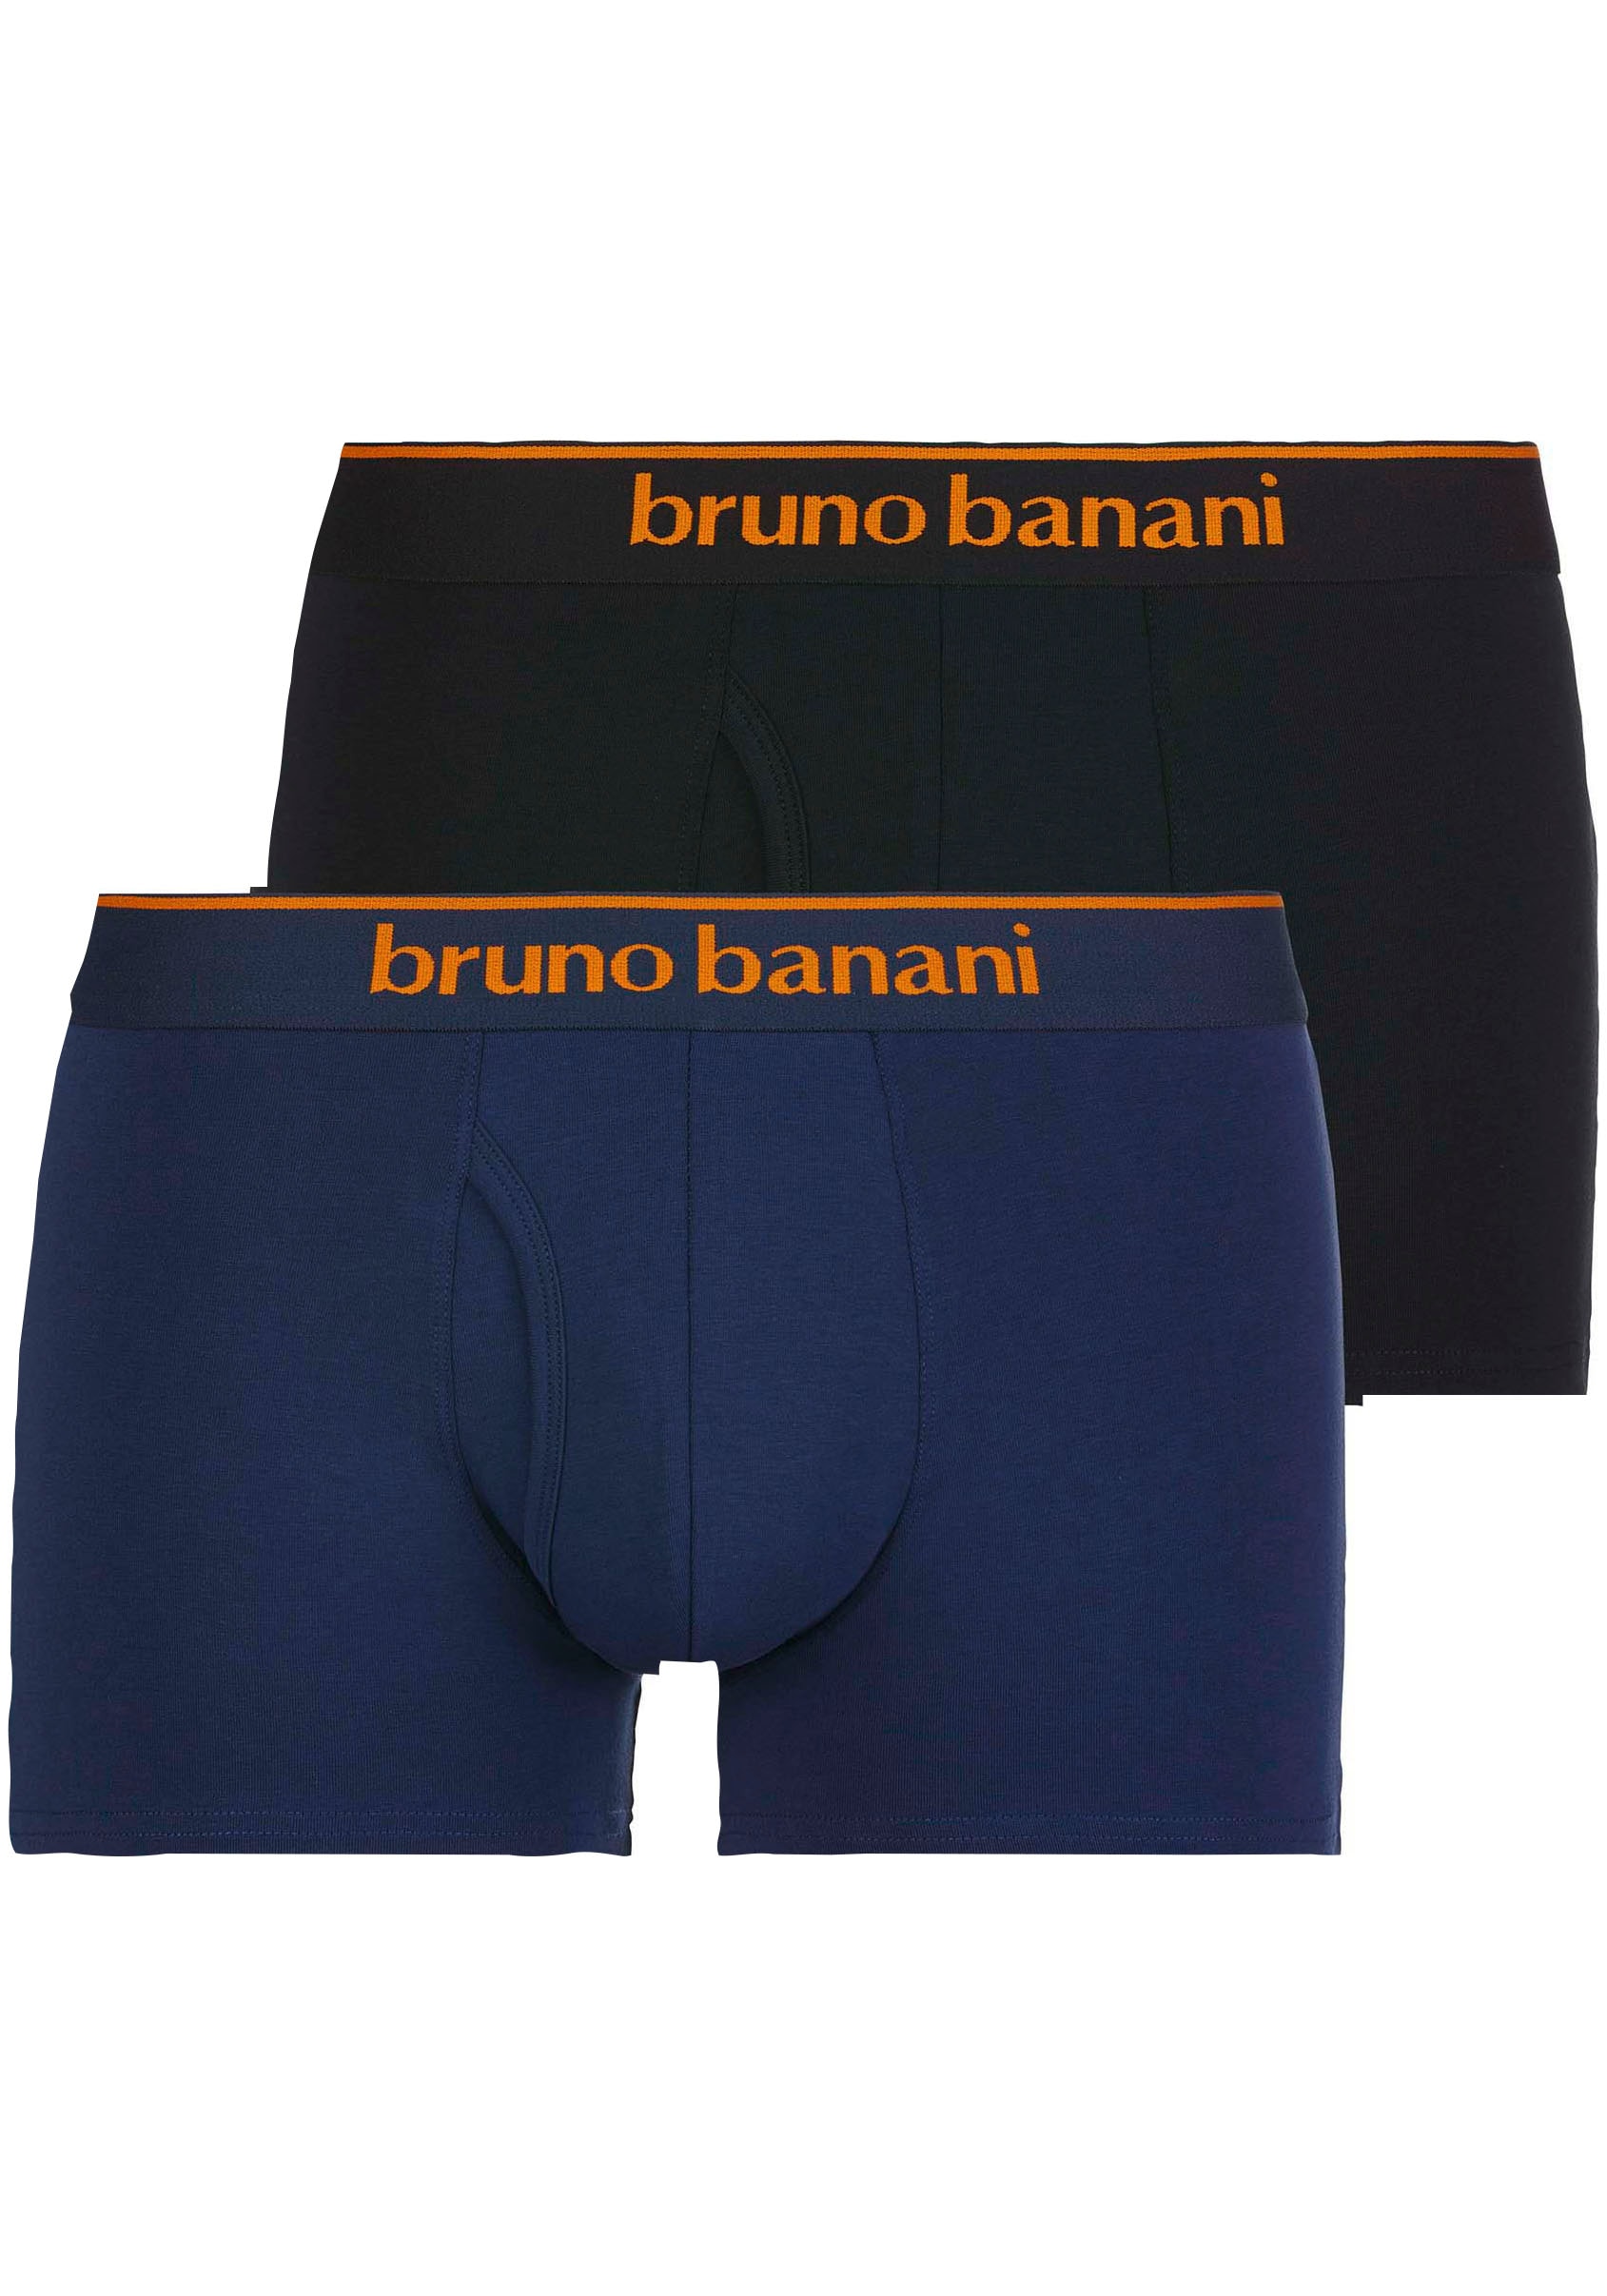 Bruno Banani Kontrastfarbene Boxershorts 2Pack »Short online (Packung, OTTO bei St.), Access«, kaufen 2 Quick Details